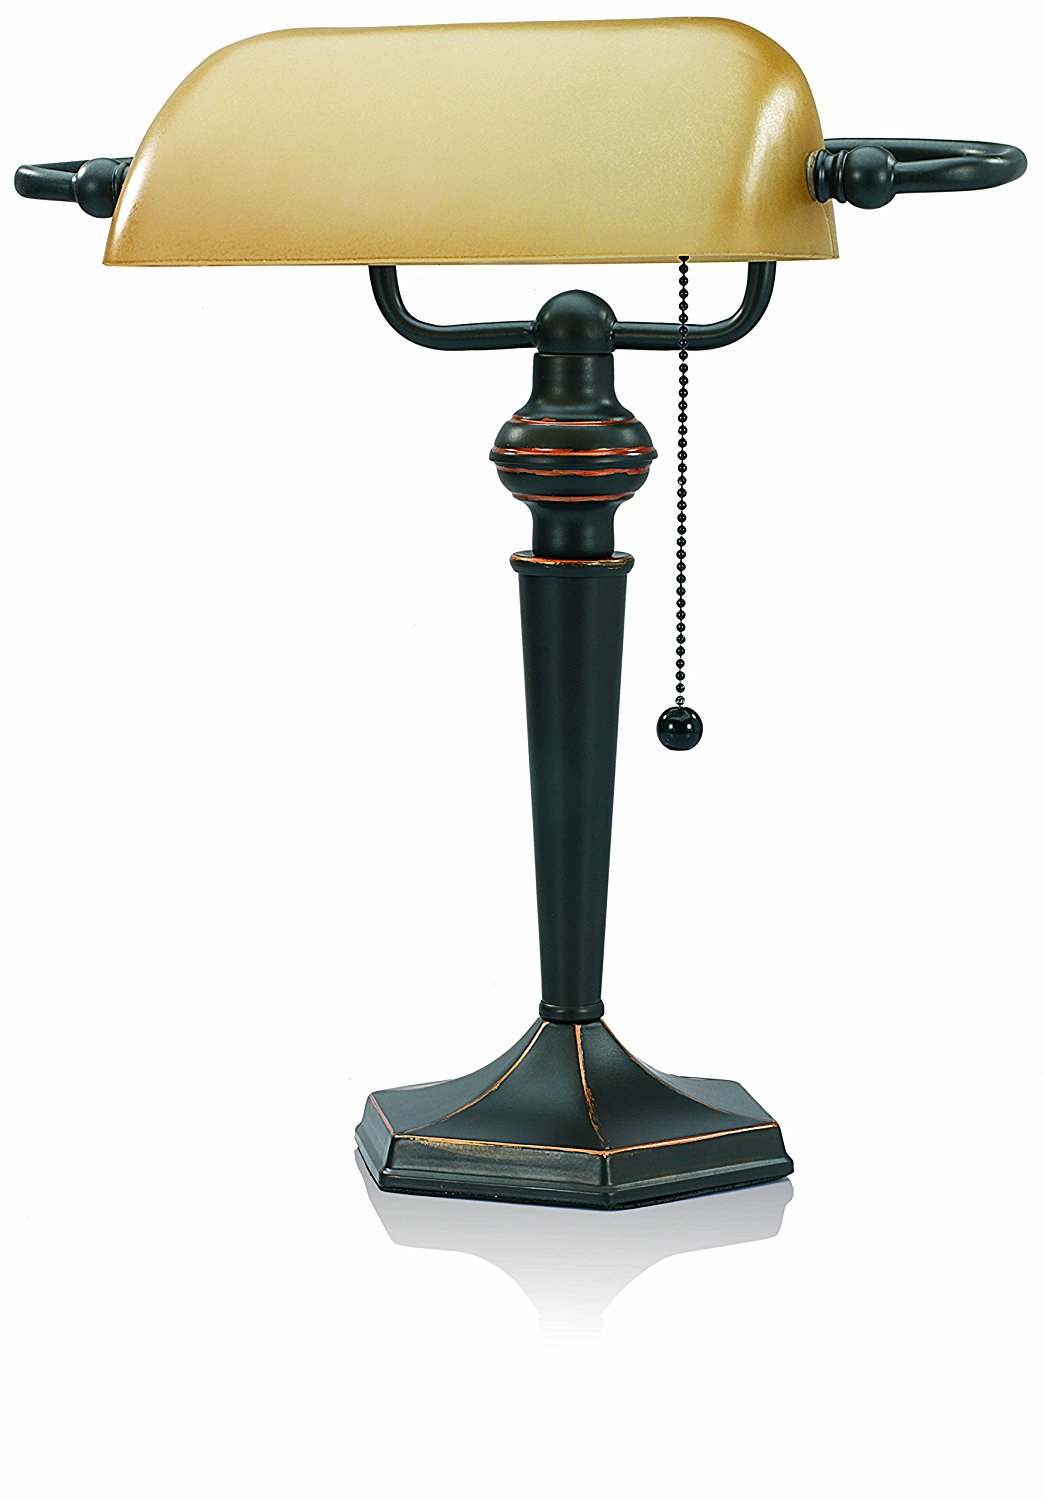 Top 8 Best Home Depot Desk Lamps